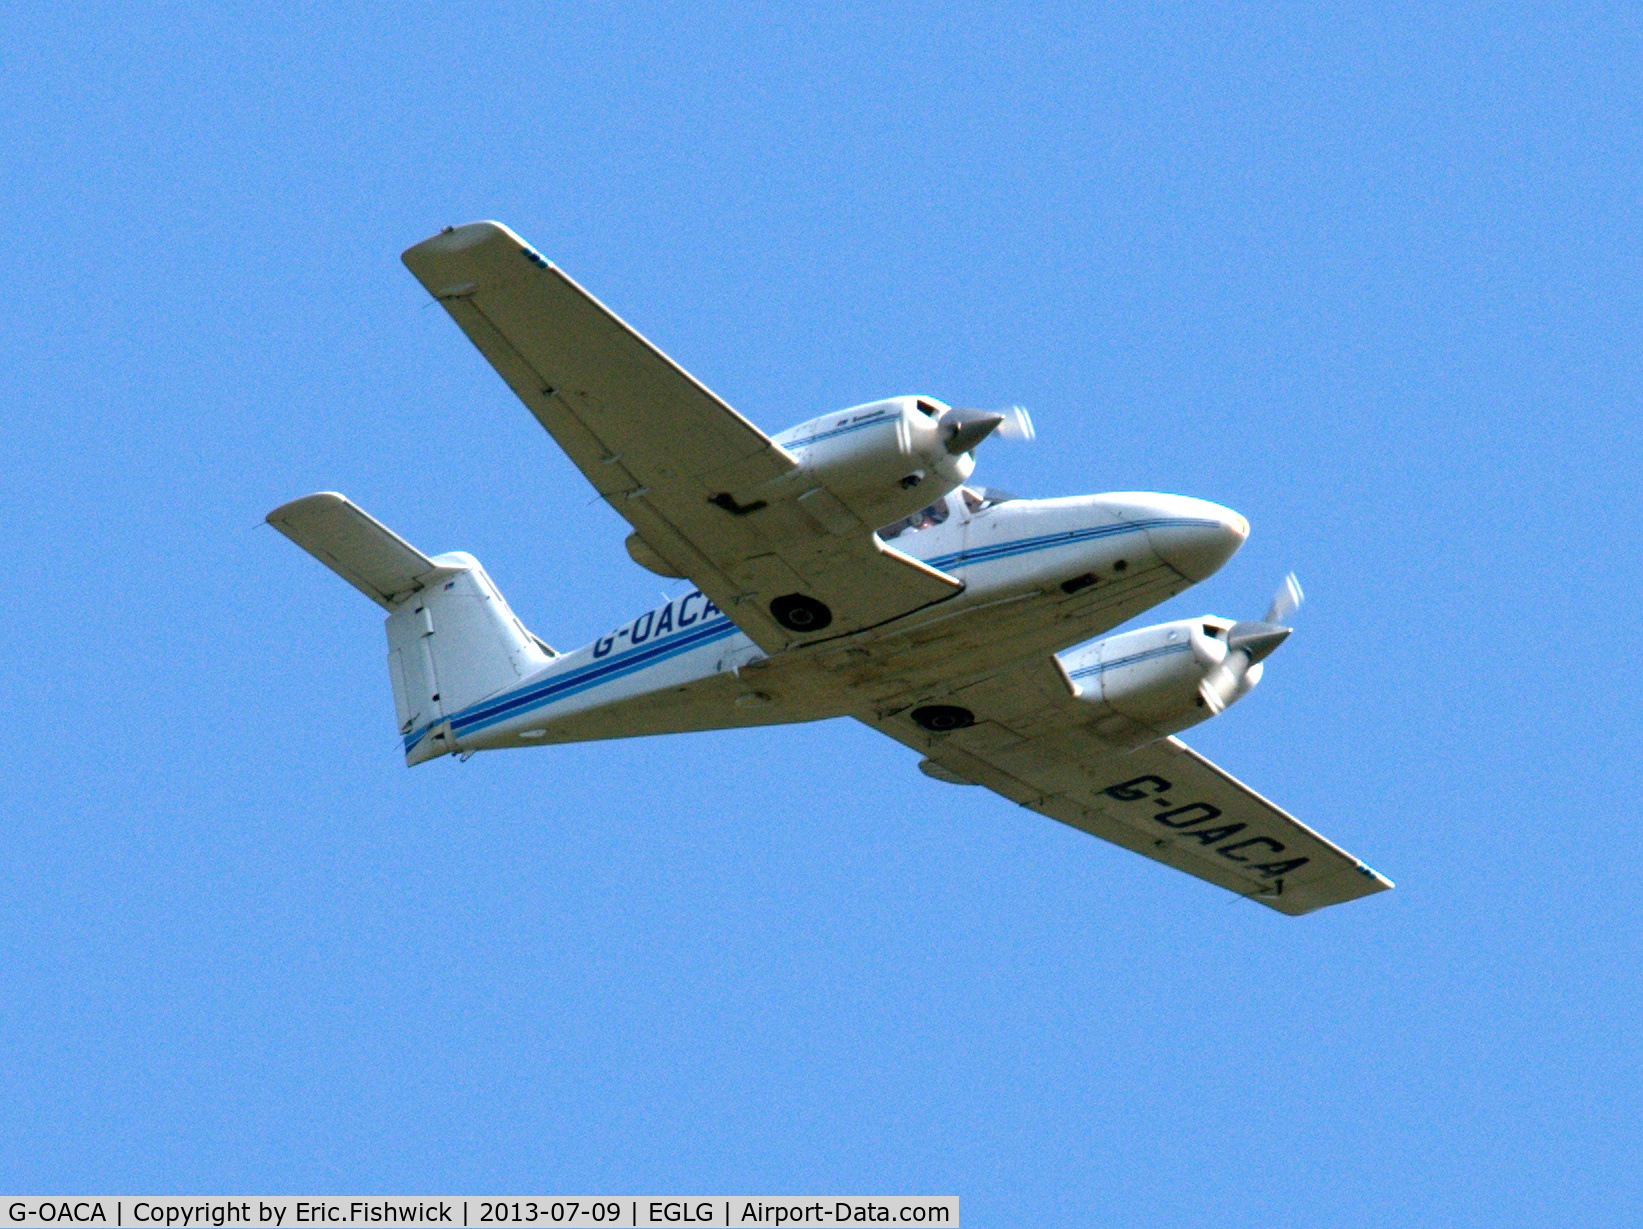 G-OACA, 1979 Piper PA-44-180 Seminole C/N 44-7995202, 43. G-OACA from Panshanger Airfield overflying Tewin Village.